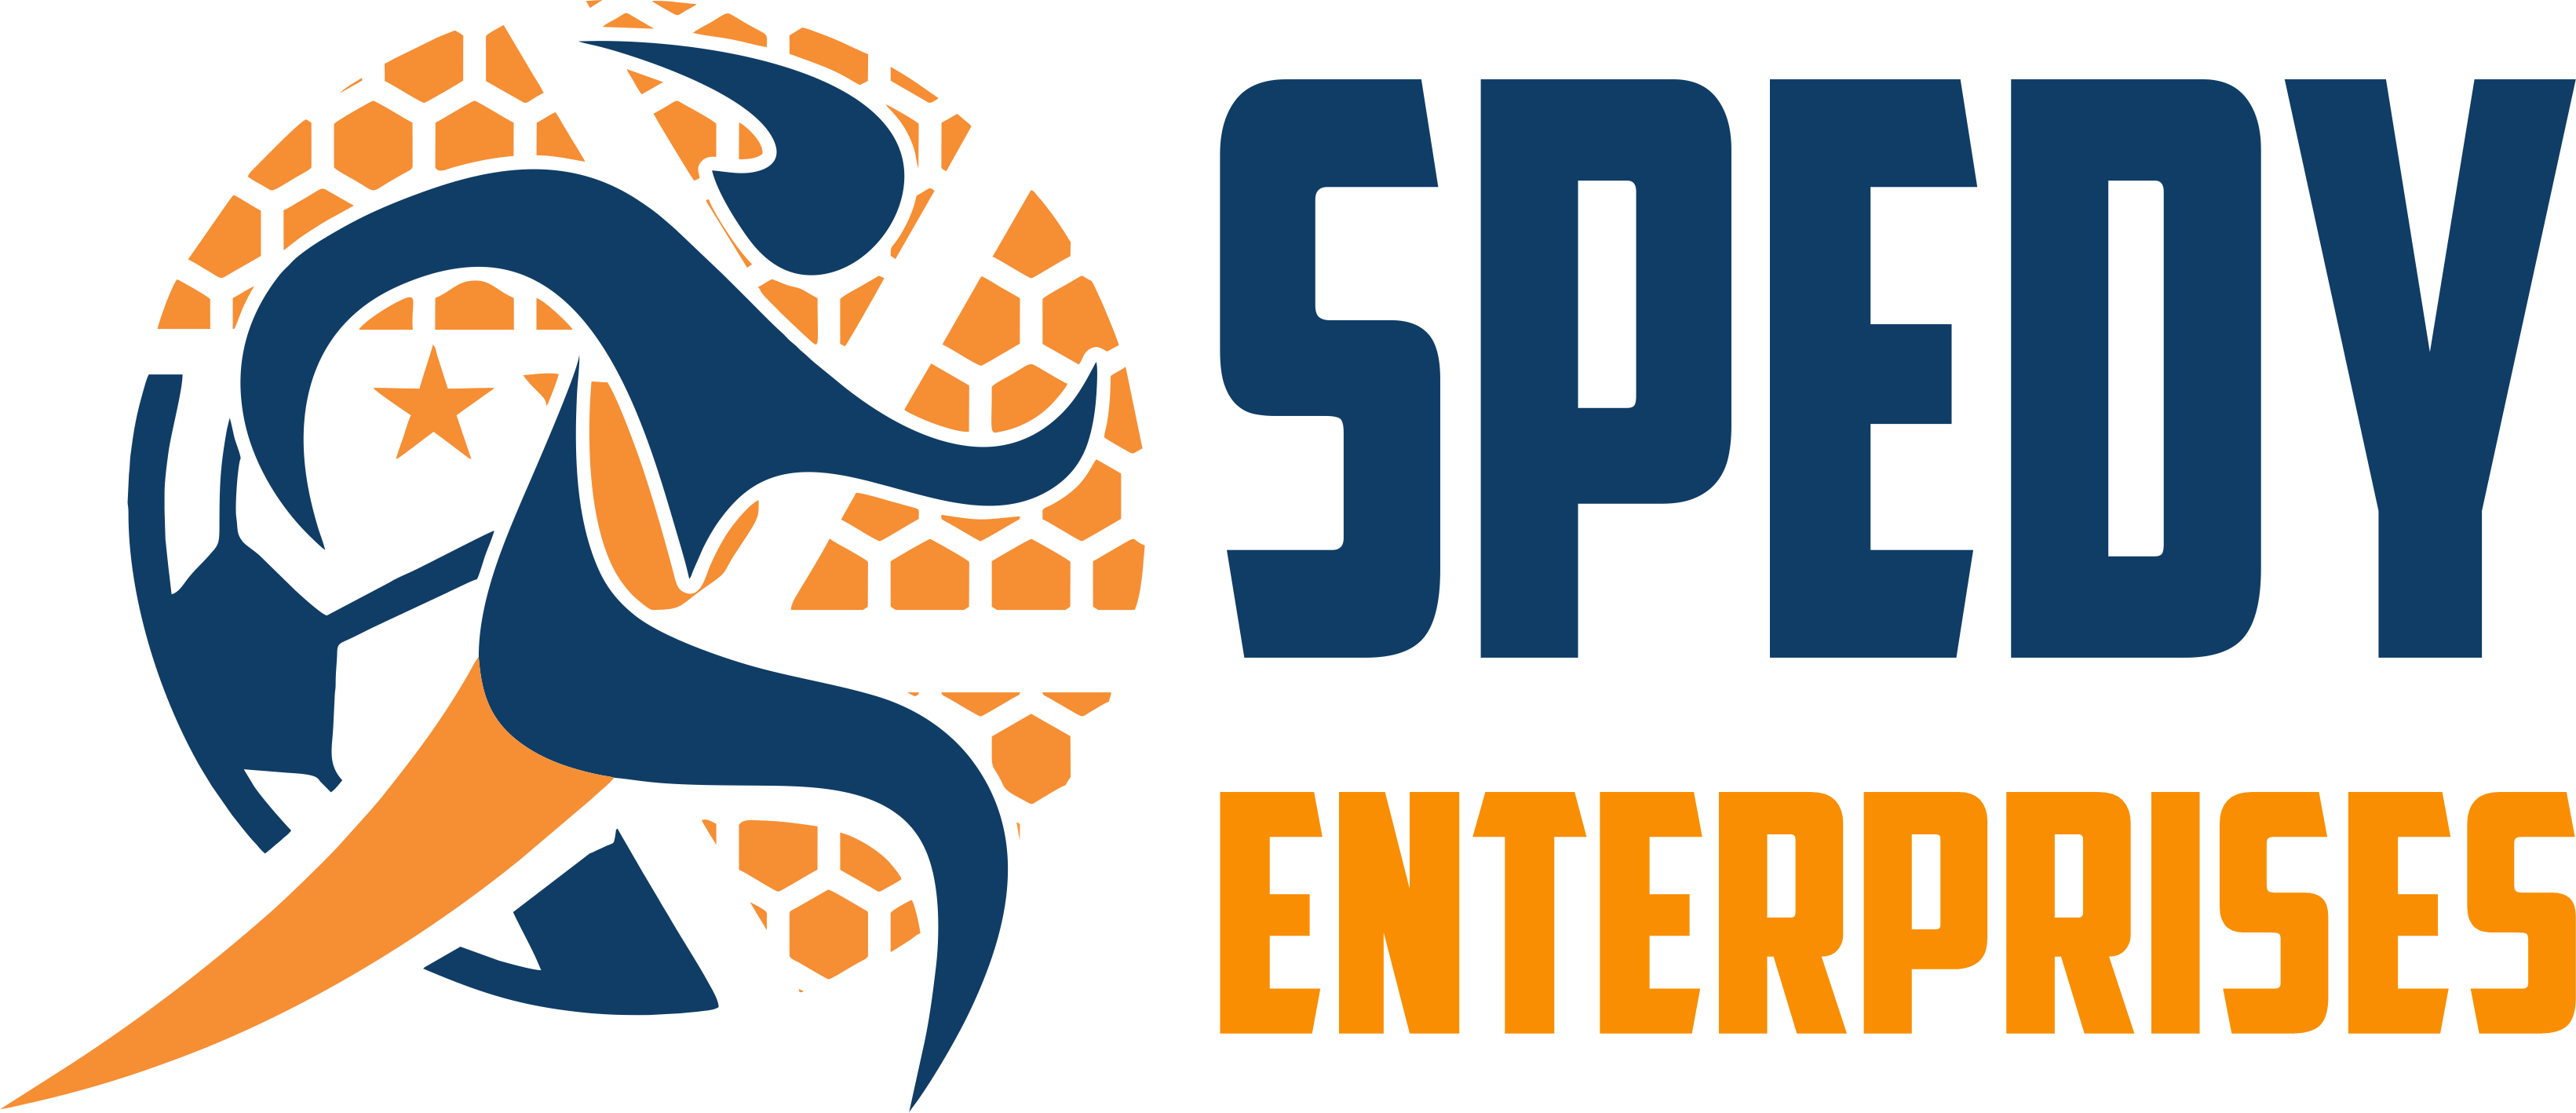 Spedy Enterprises